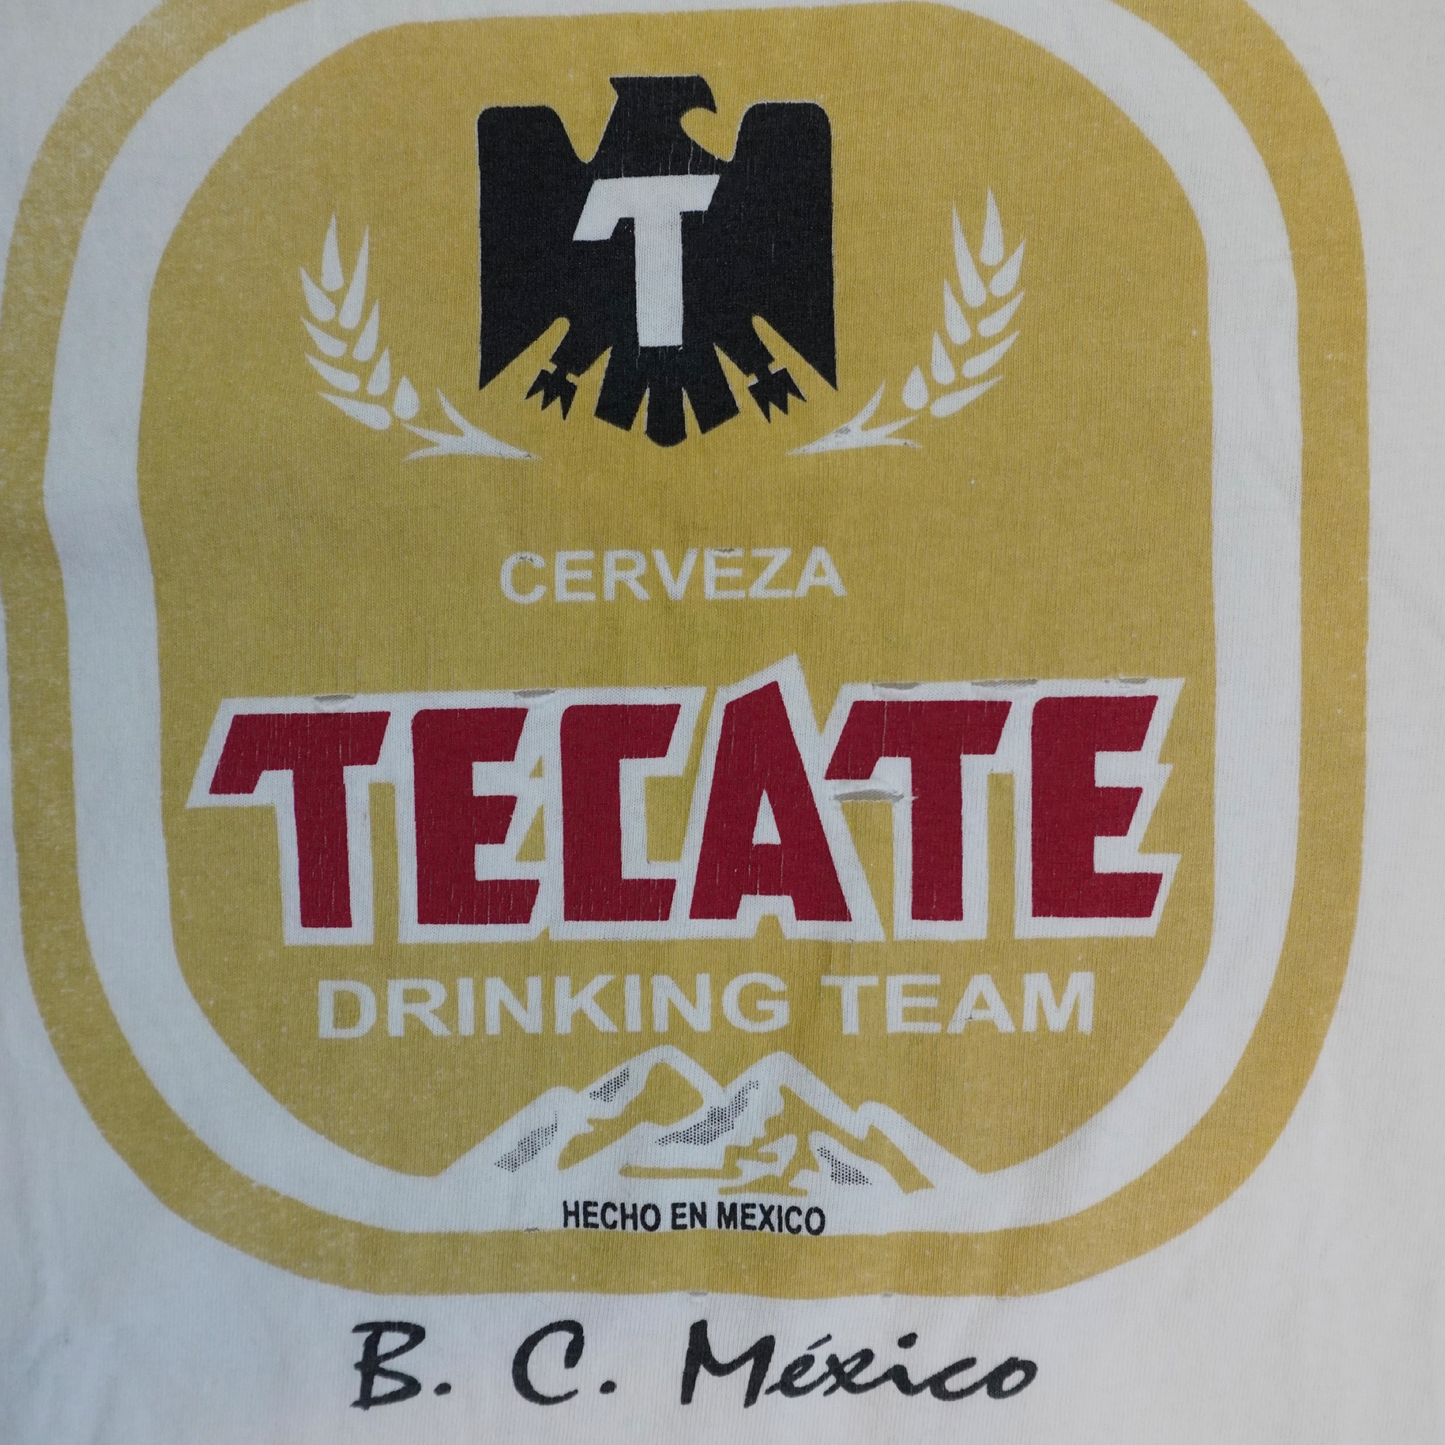 (L) Cerveza Tecate Drinking team tee